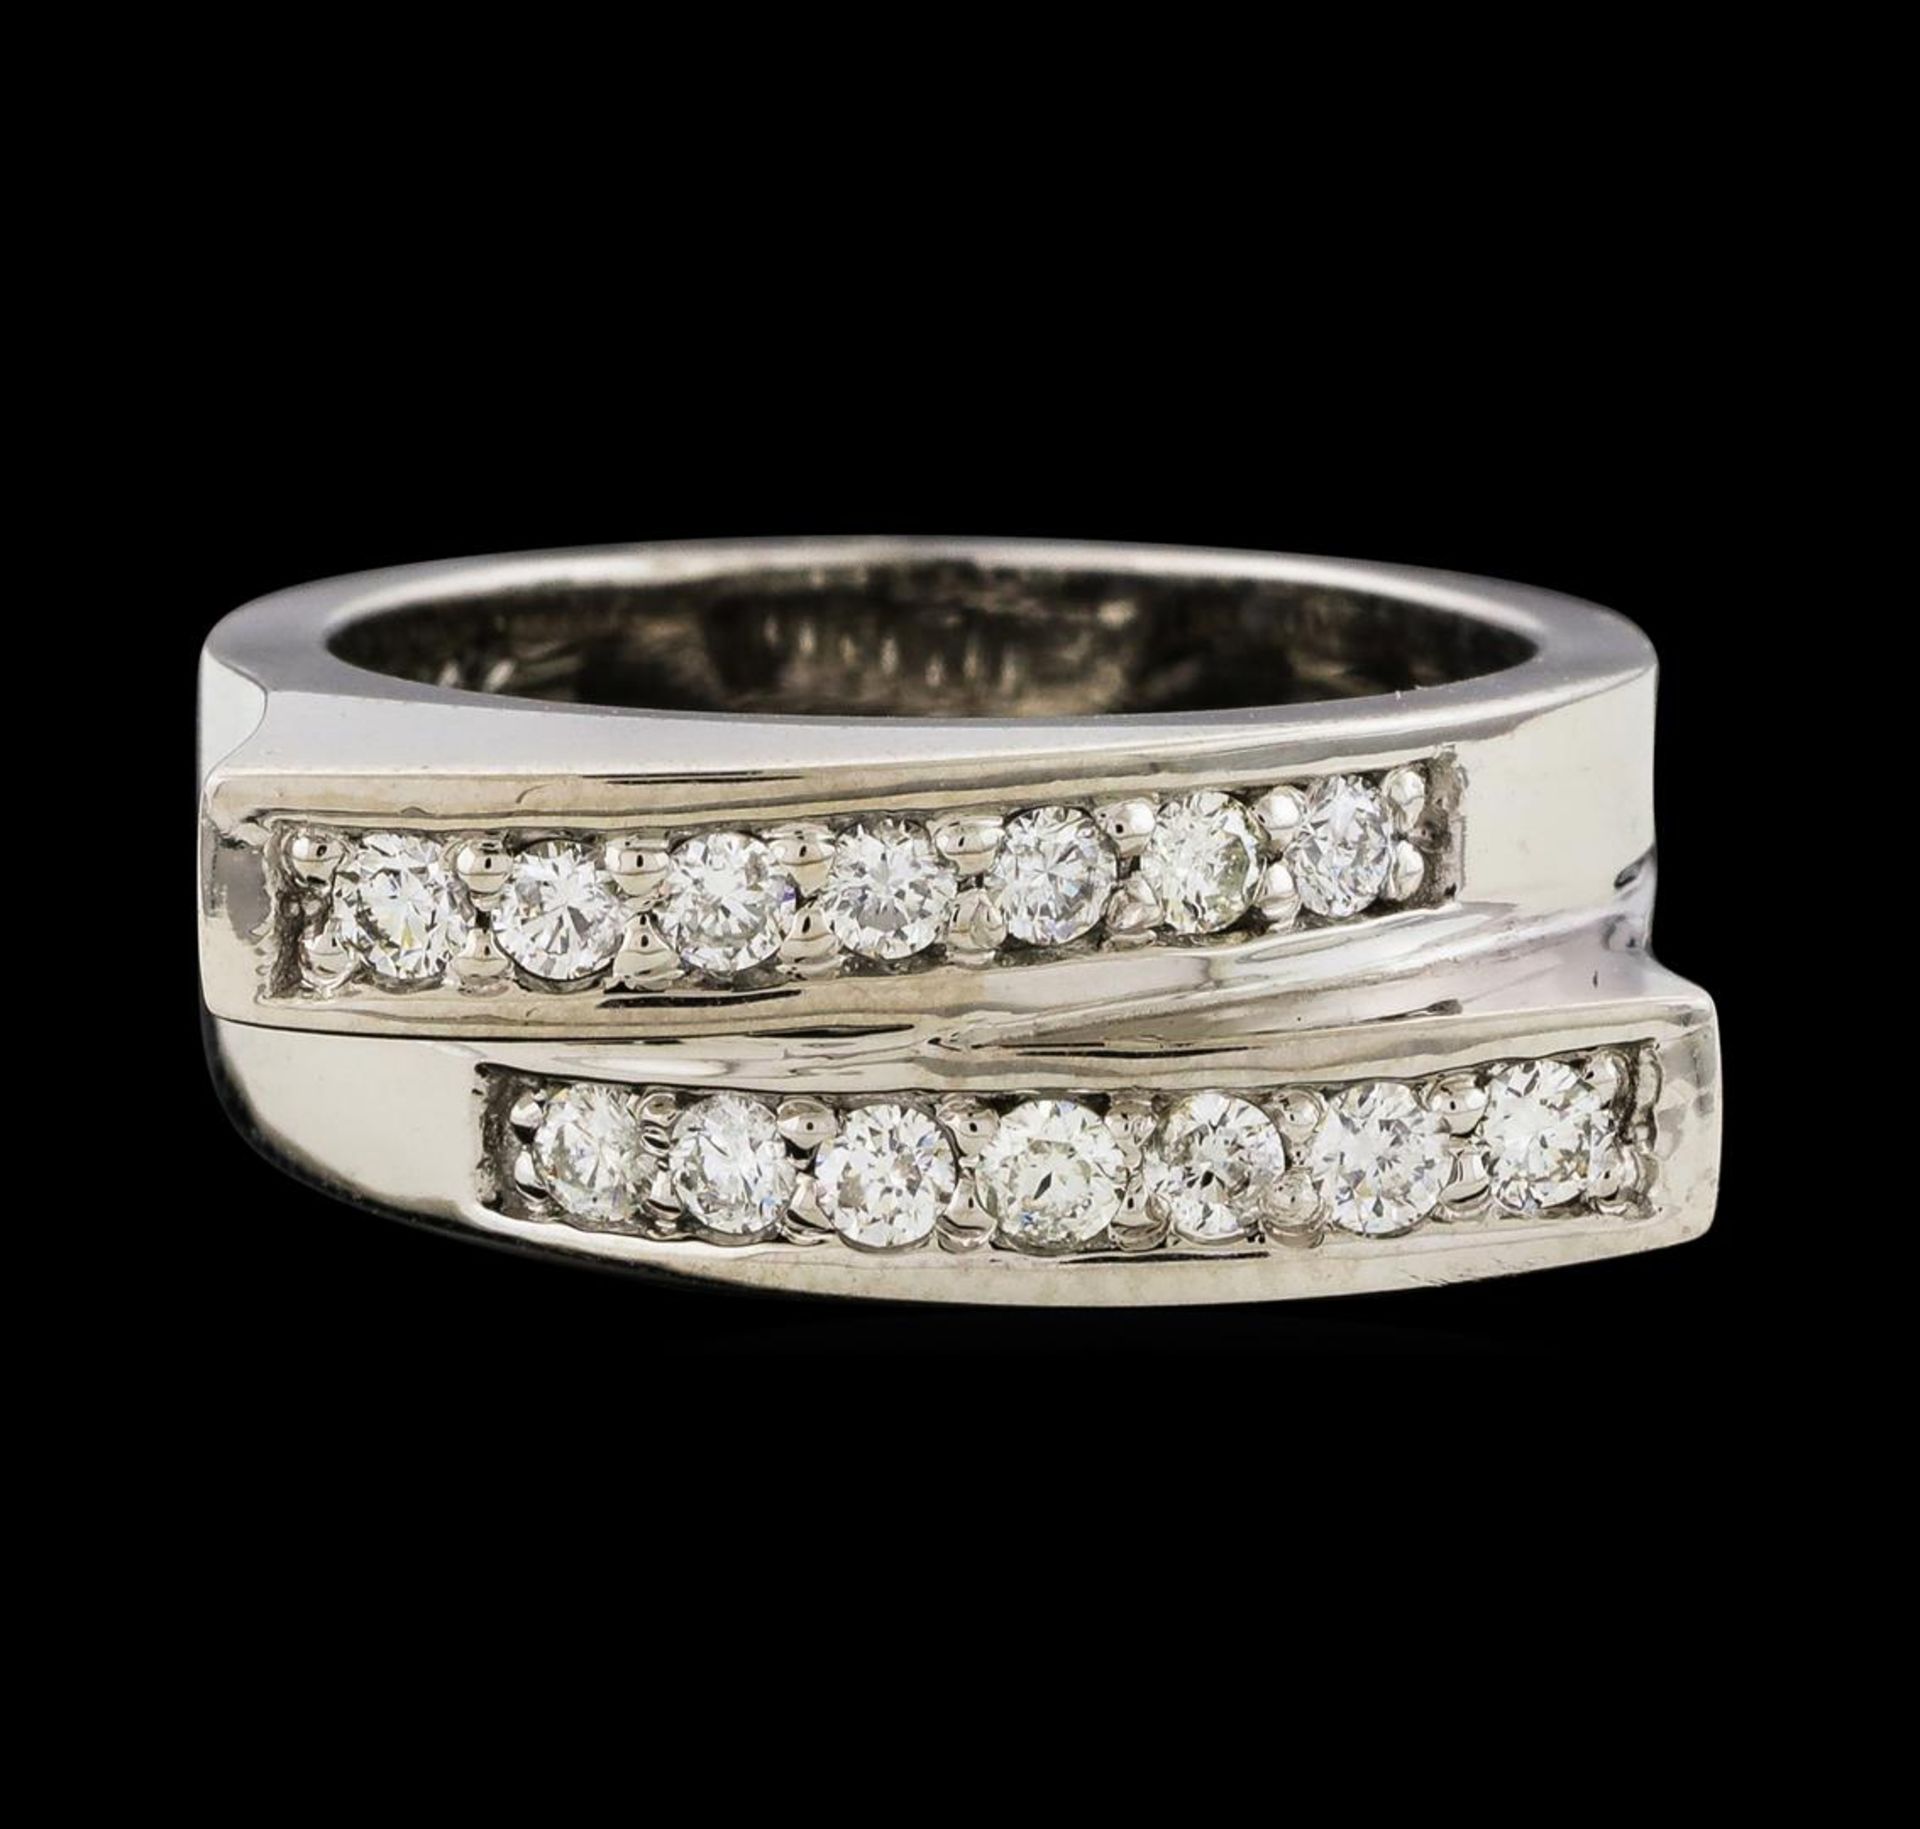 0.44 ctw Diamond Ring - 14KT White Gold - Image 2 of 4